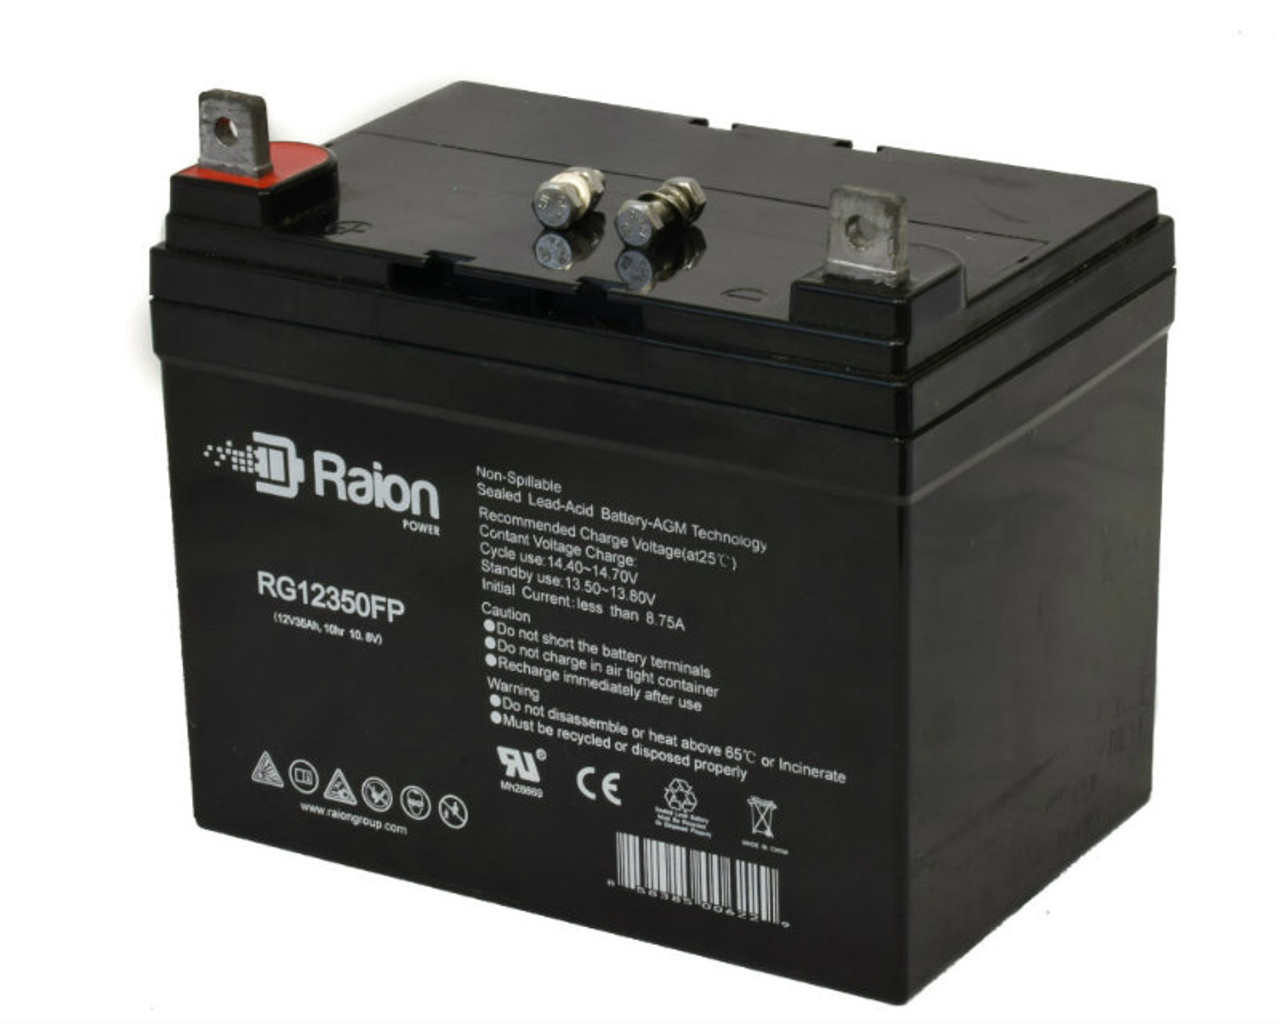 Raion Power Replacement 12V 35Ah RG12350FP Battery for Power Kingdom PK33-12